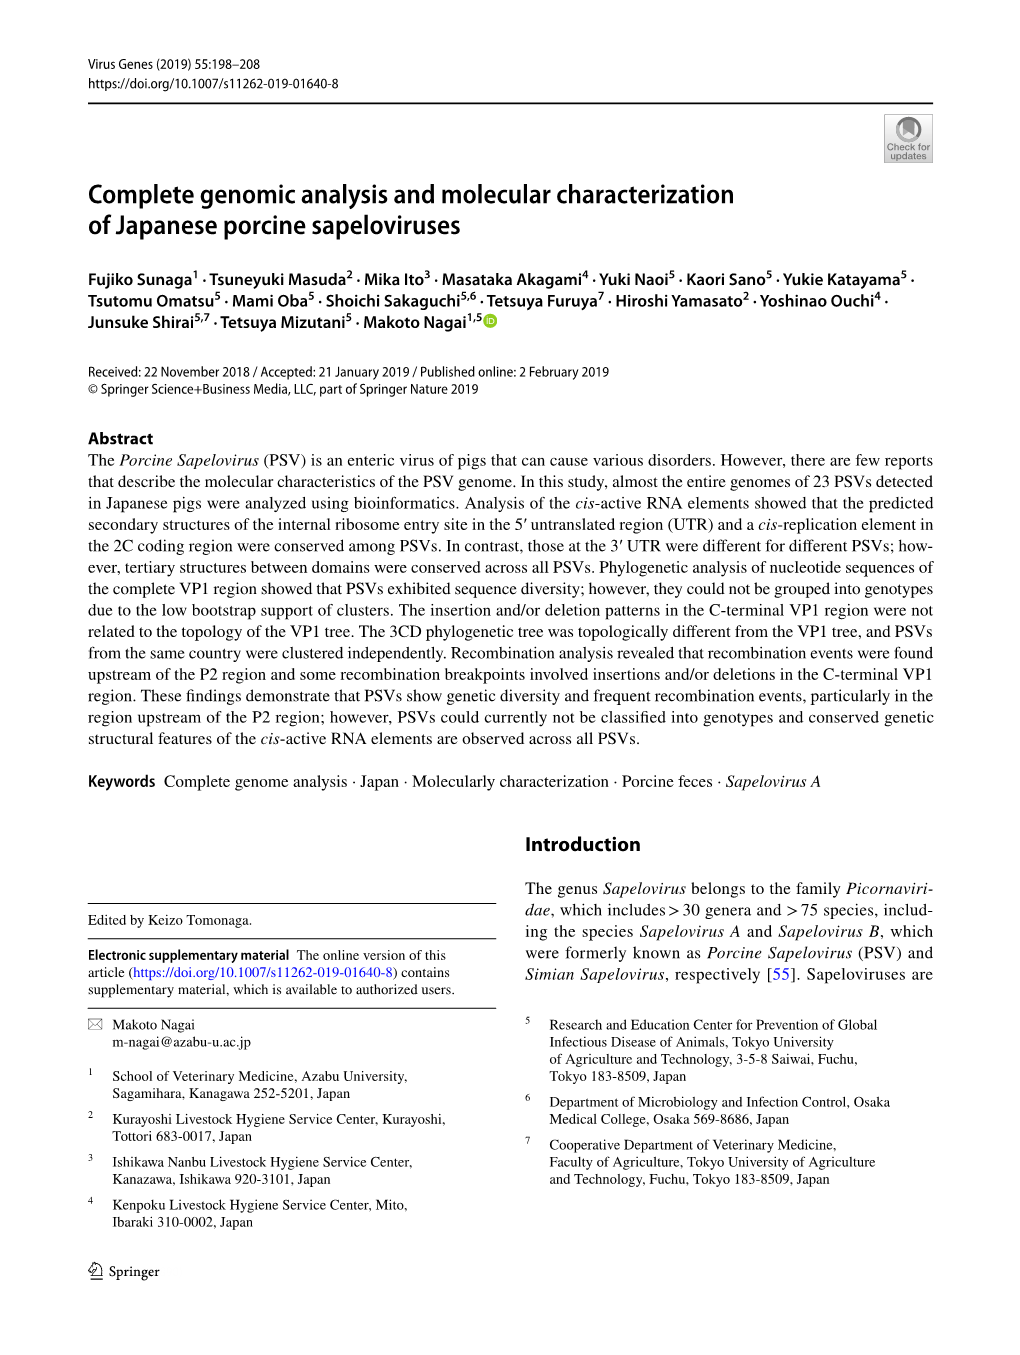 Complete Genomic Analysis and Molecular Characterization of Japanese Porcine Sapeloviruses